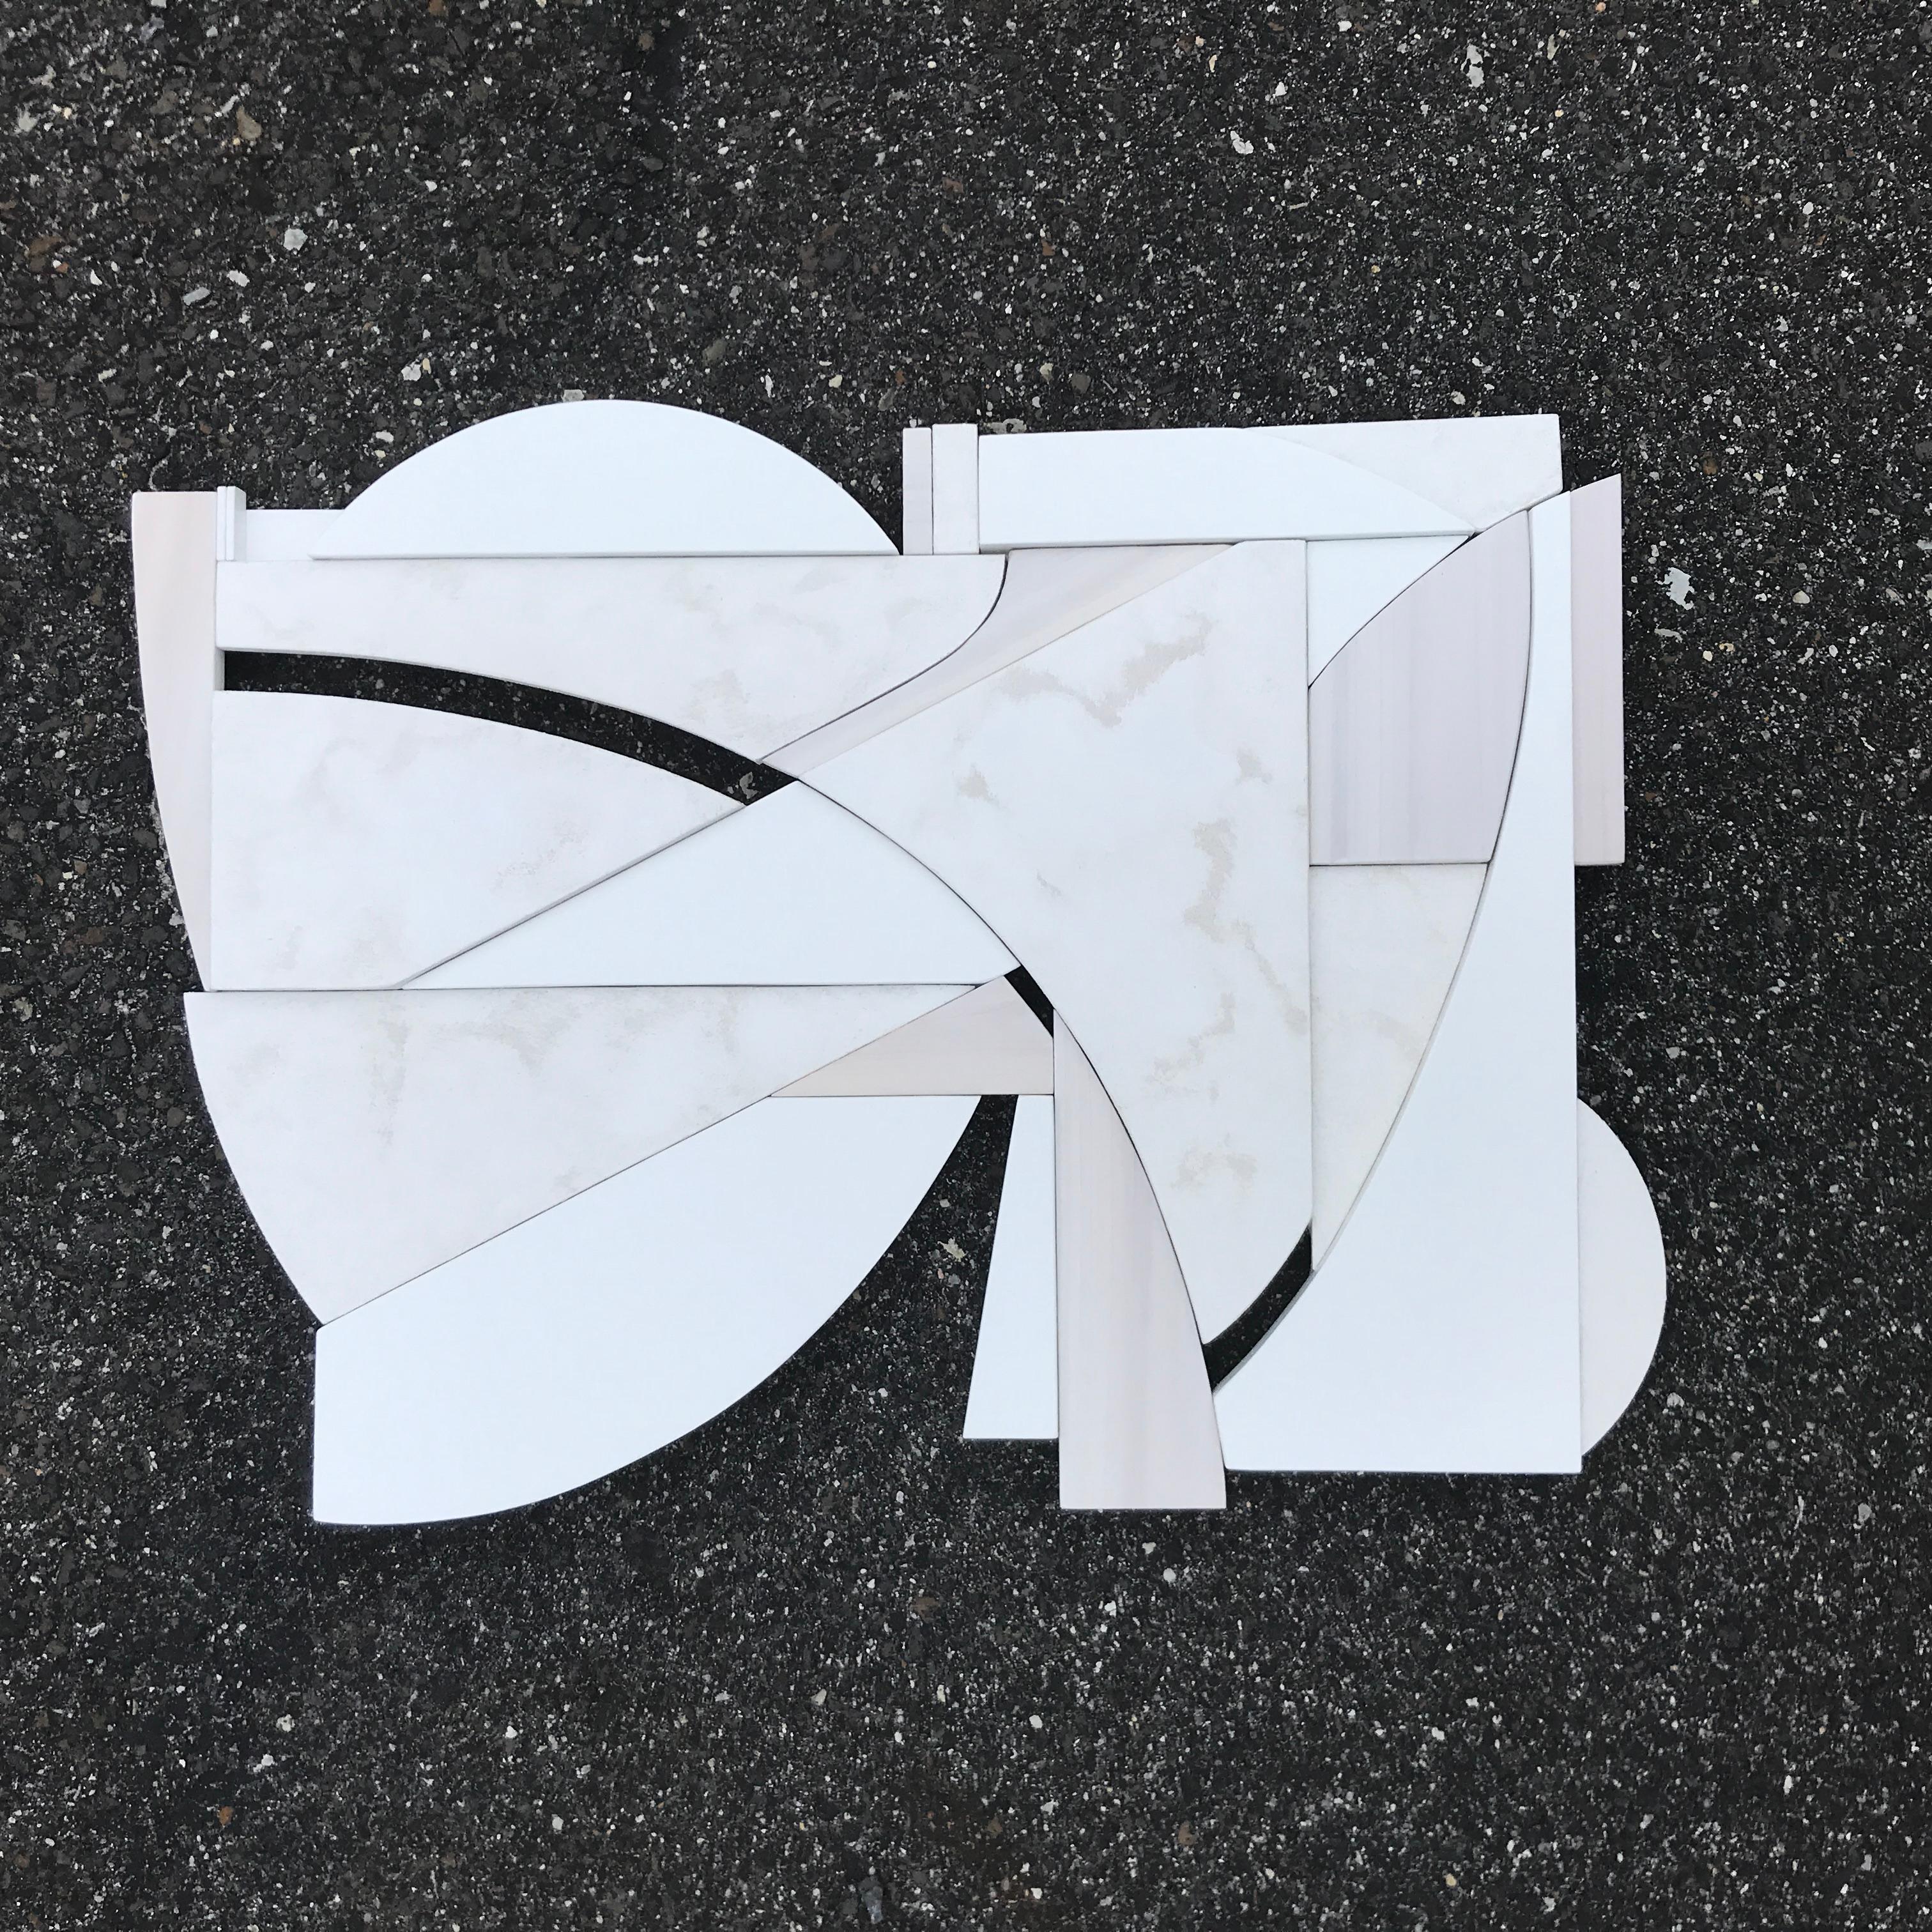 Blanco (modern art deco abstract wall sculpture geometric white monochrome cubic 4